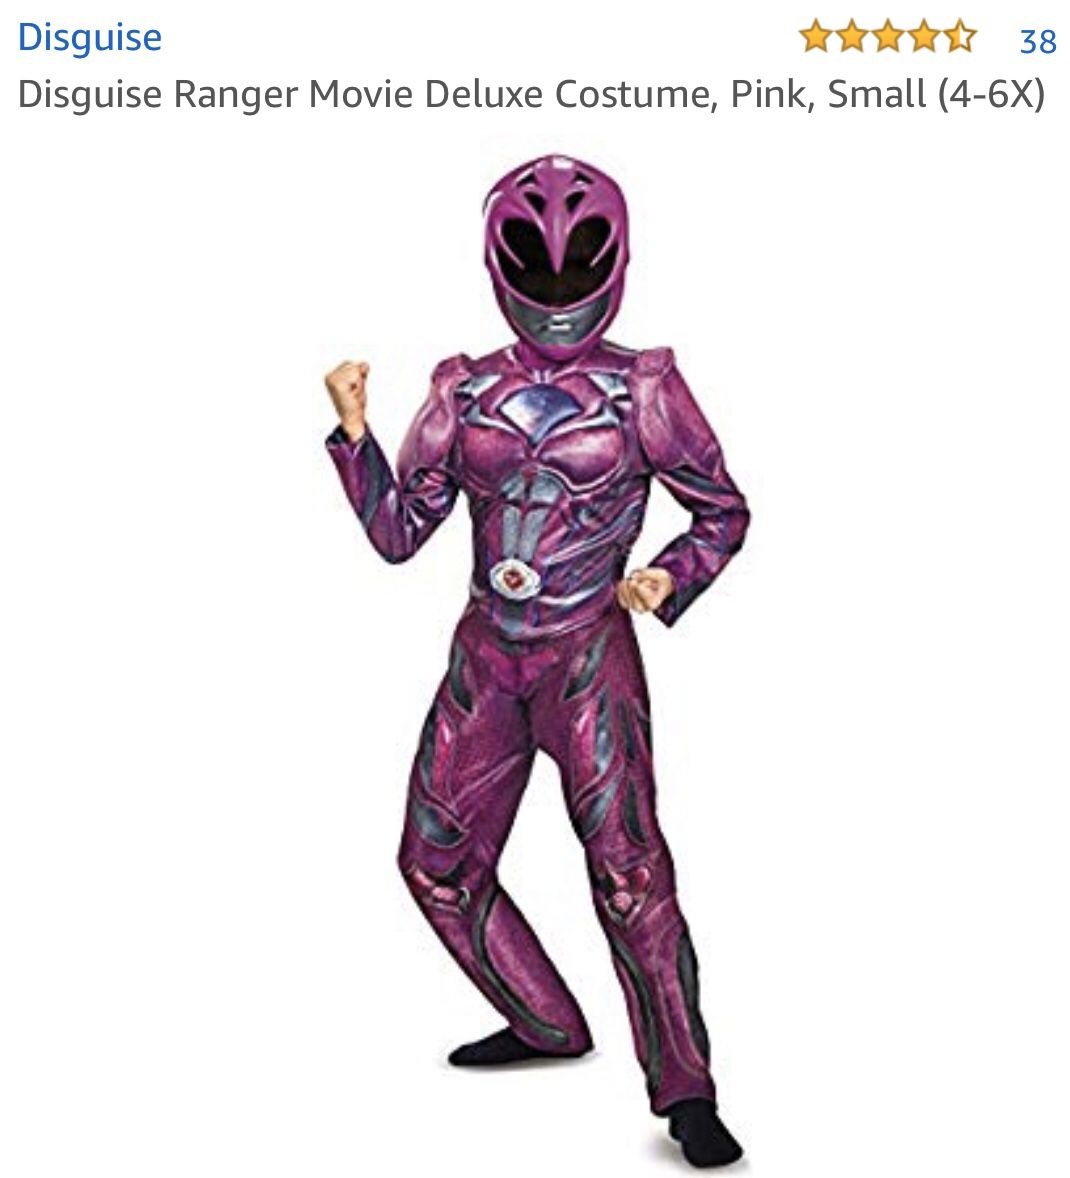 HALLOWEEN COSTUME: Disguise Ranger Movie Costume Small (4-6x)